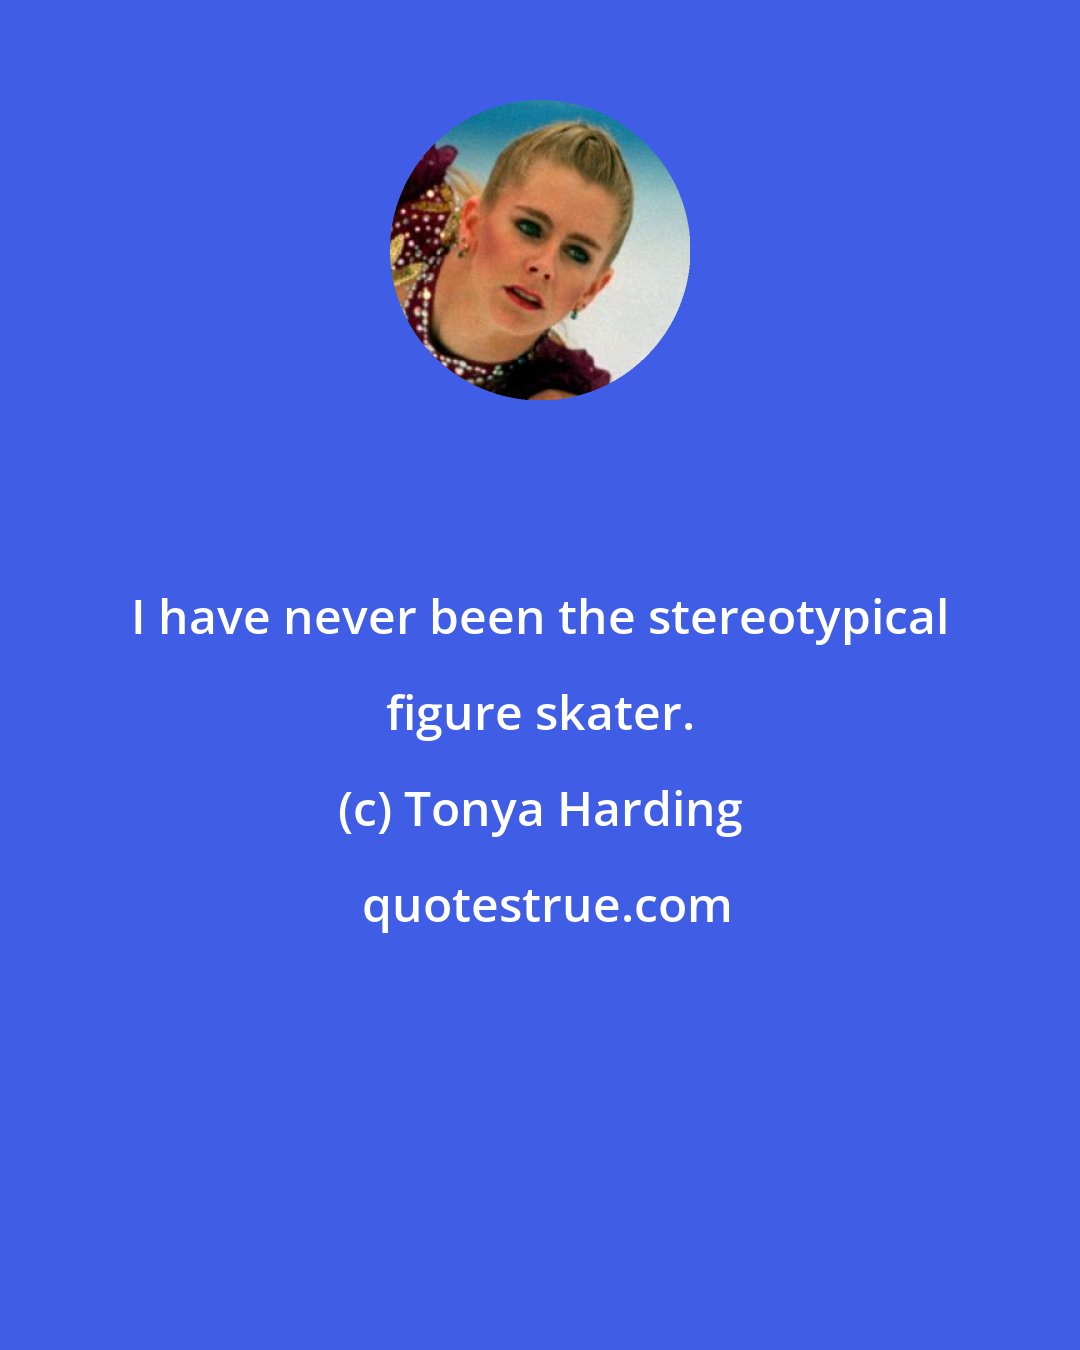 Tonya Harding: I have never been the stereotypical figure skater.